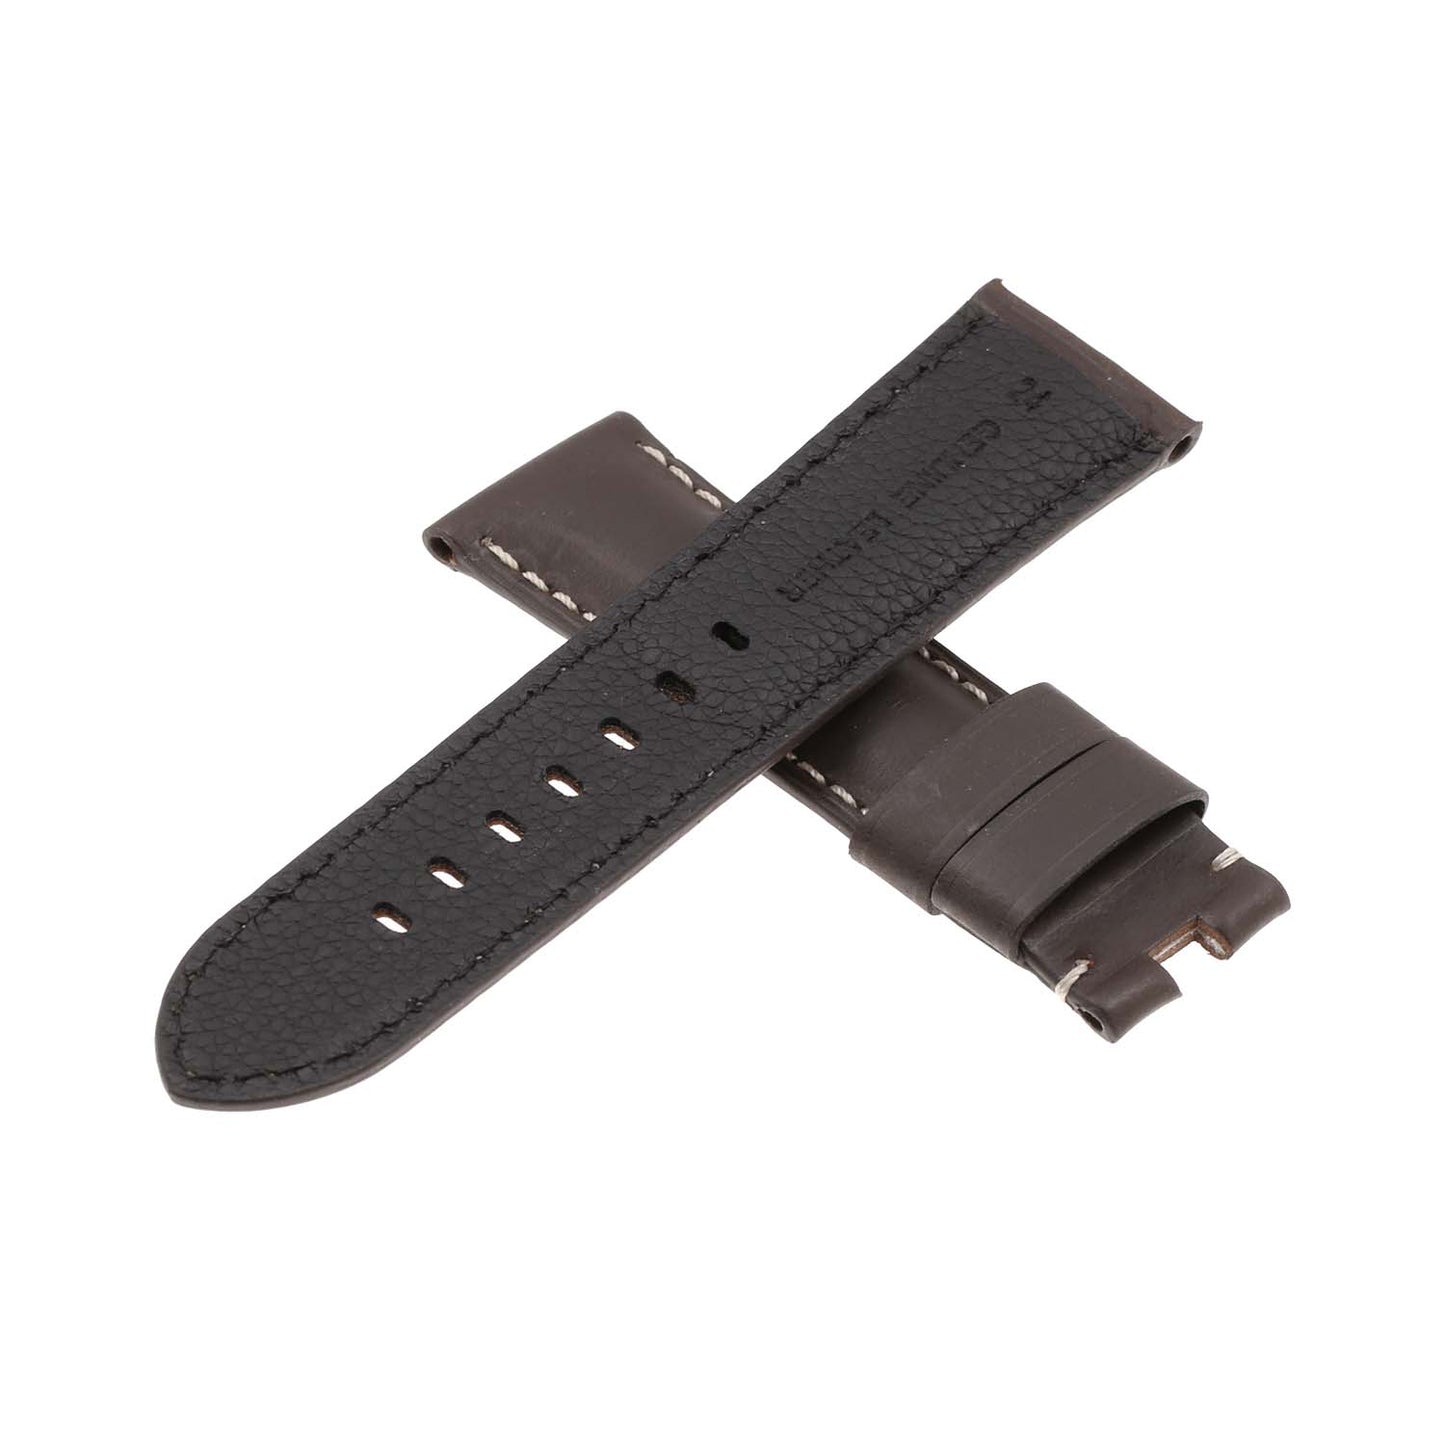 DASSARI Smooth Leather Strap w/ Deployant Clasp (Standard, Long) for Samsung Galaxy Watch 3 (45mm) Brown